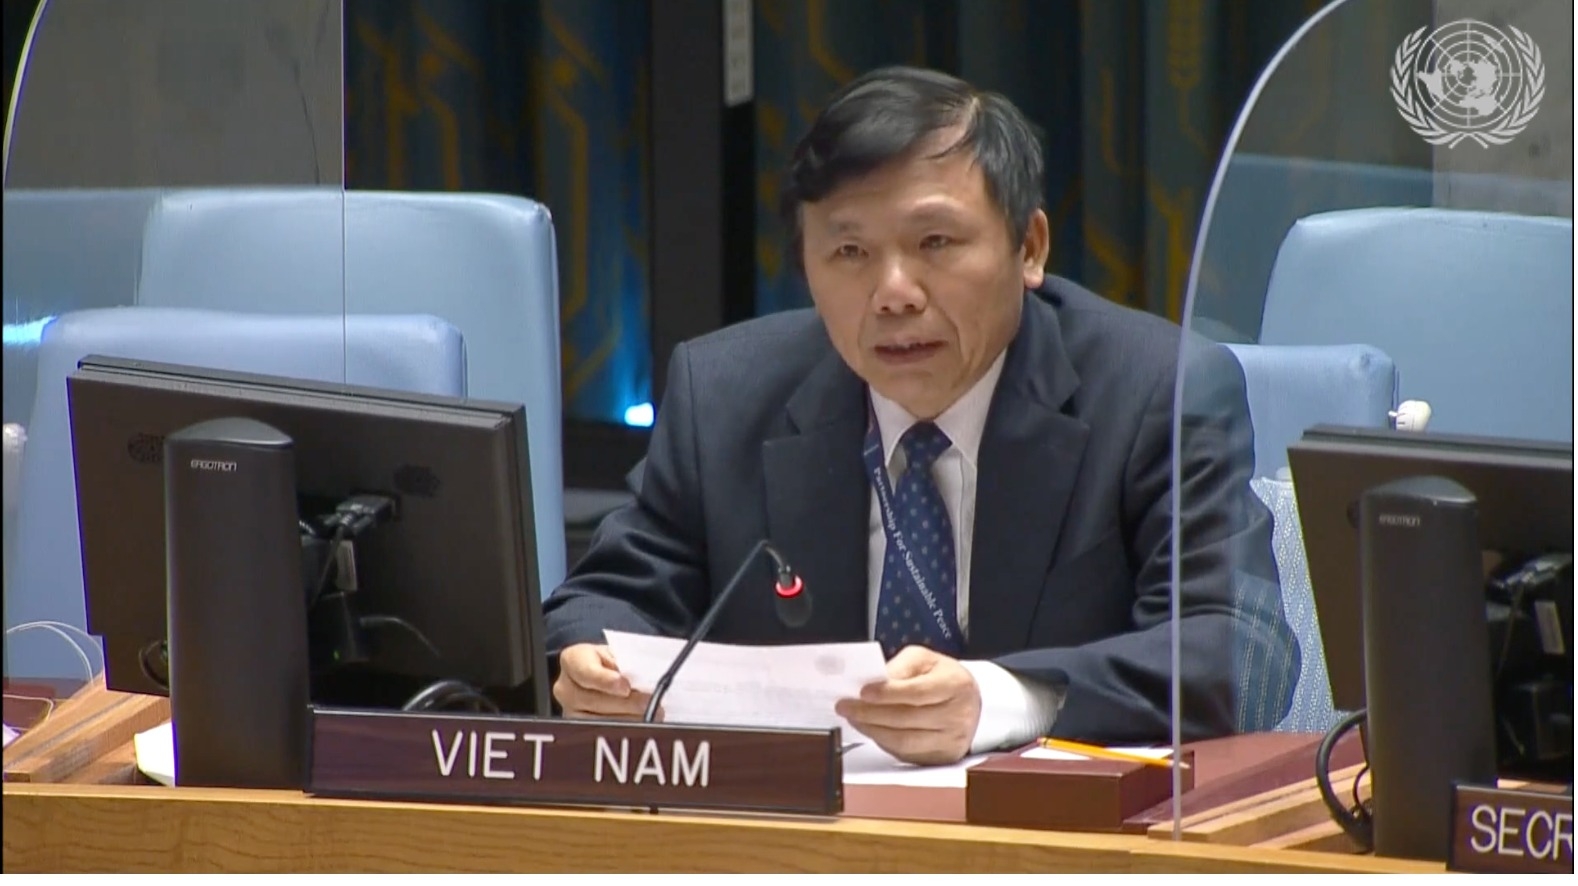 Viet Nam calls for closer UN-EU cooperation in settling global challenges